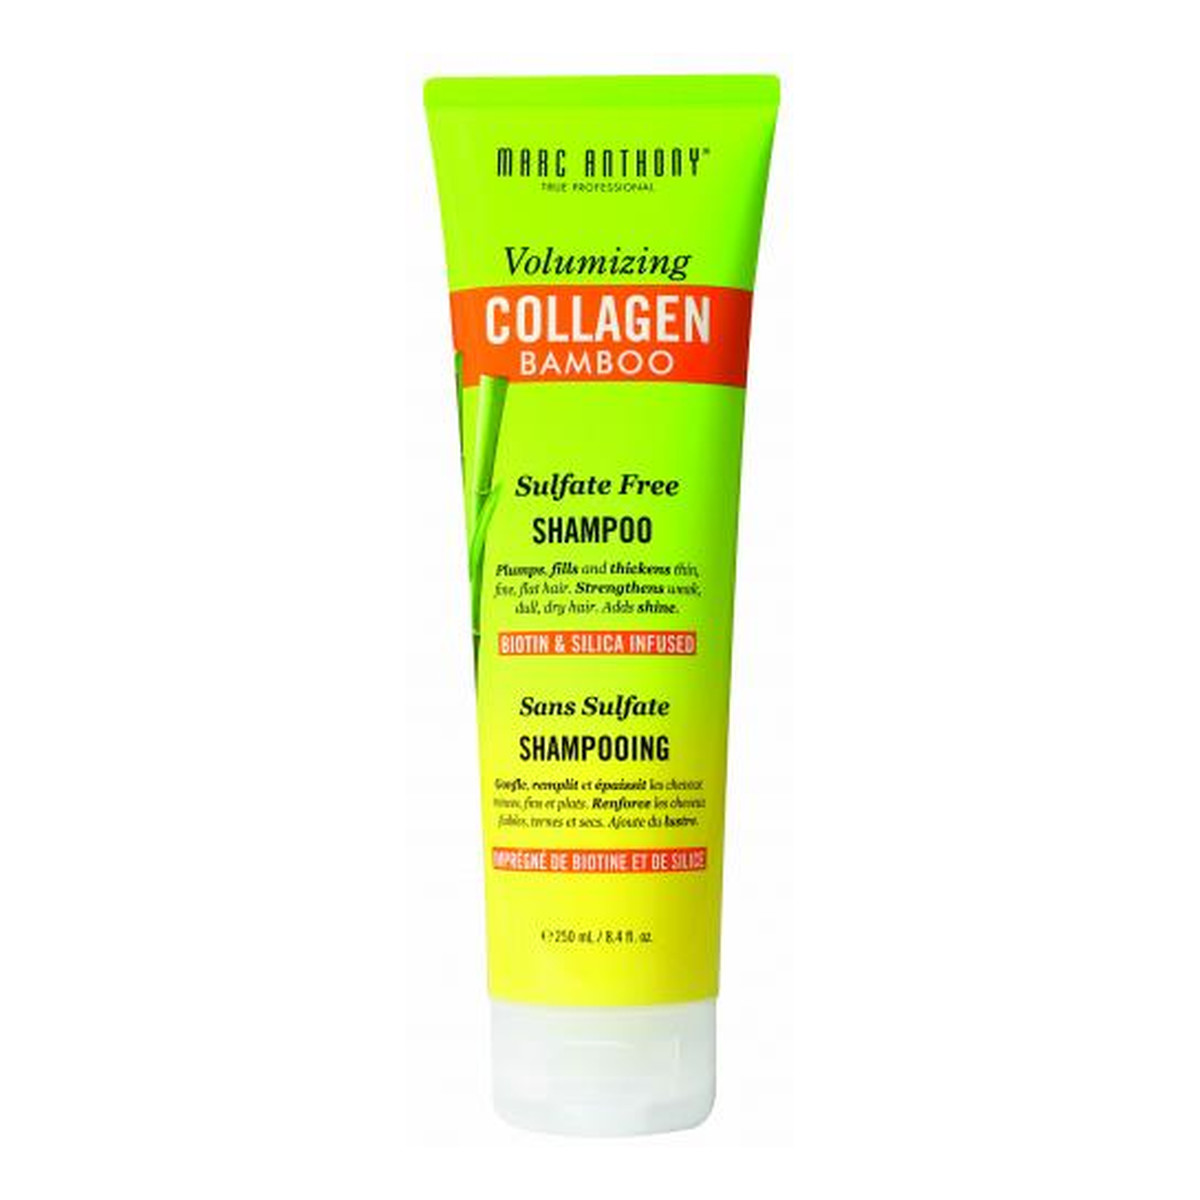 Marc Anthony Collagen Bamboo True Professional Volumizing Shampoo szampon dodający objętości z kolegenem i ekstraktem z bambusa 250ml